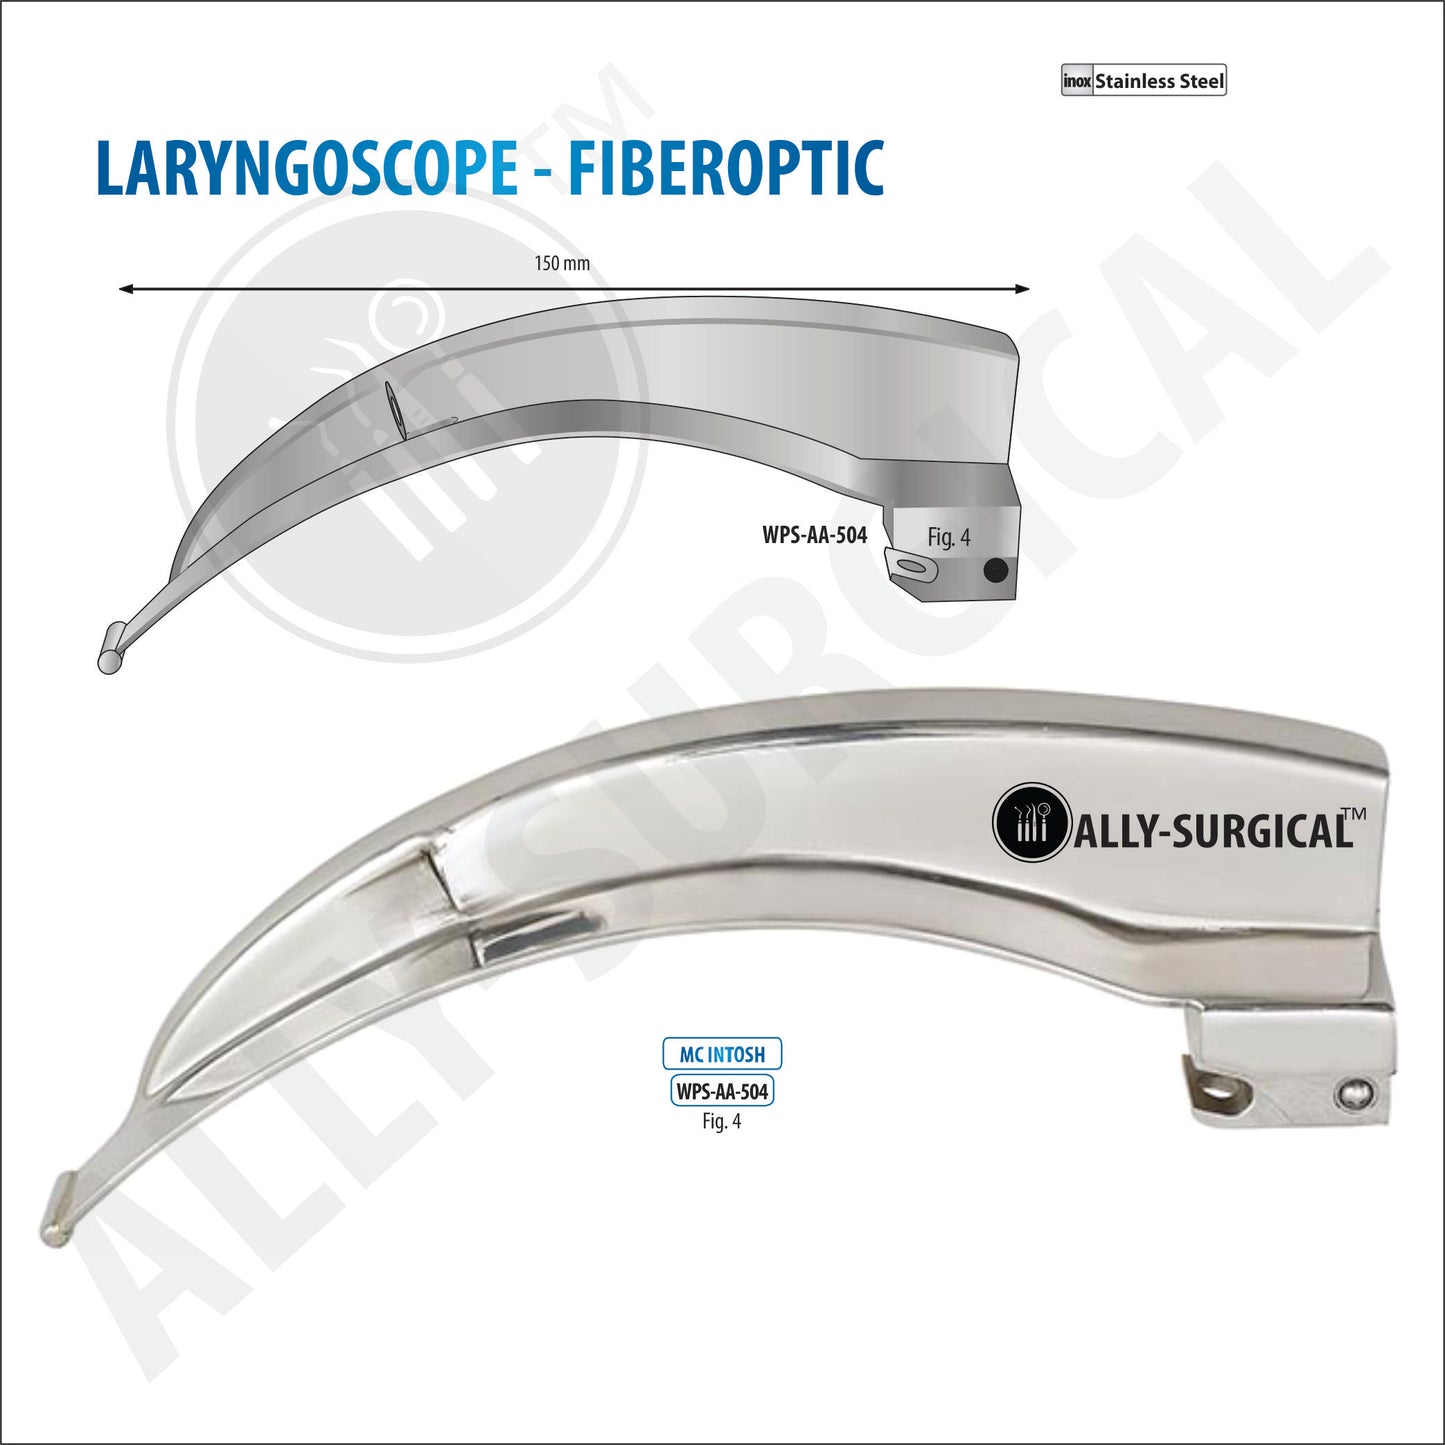 MC INTOSH fiber optic laryngoscope, Fig 4